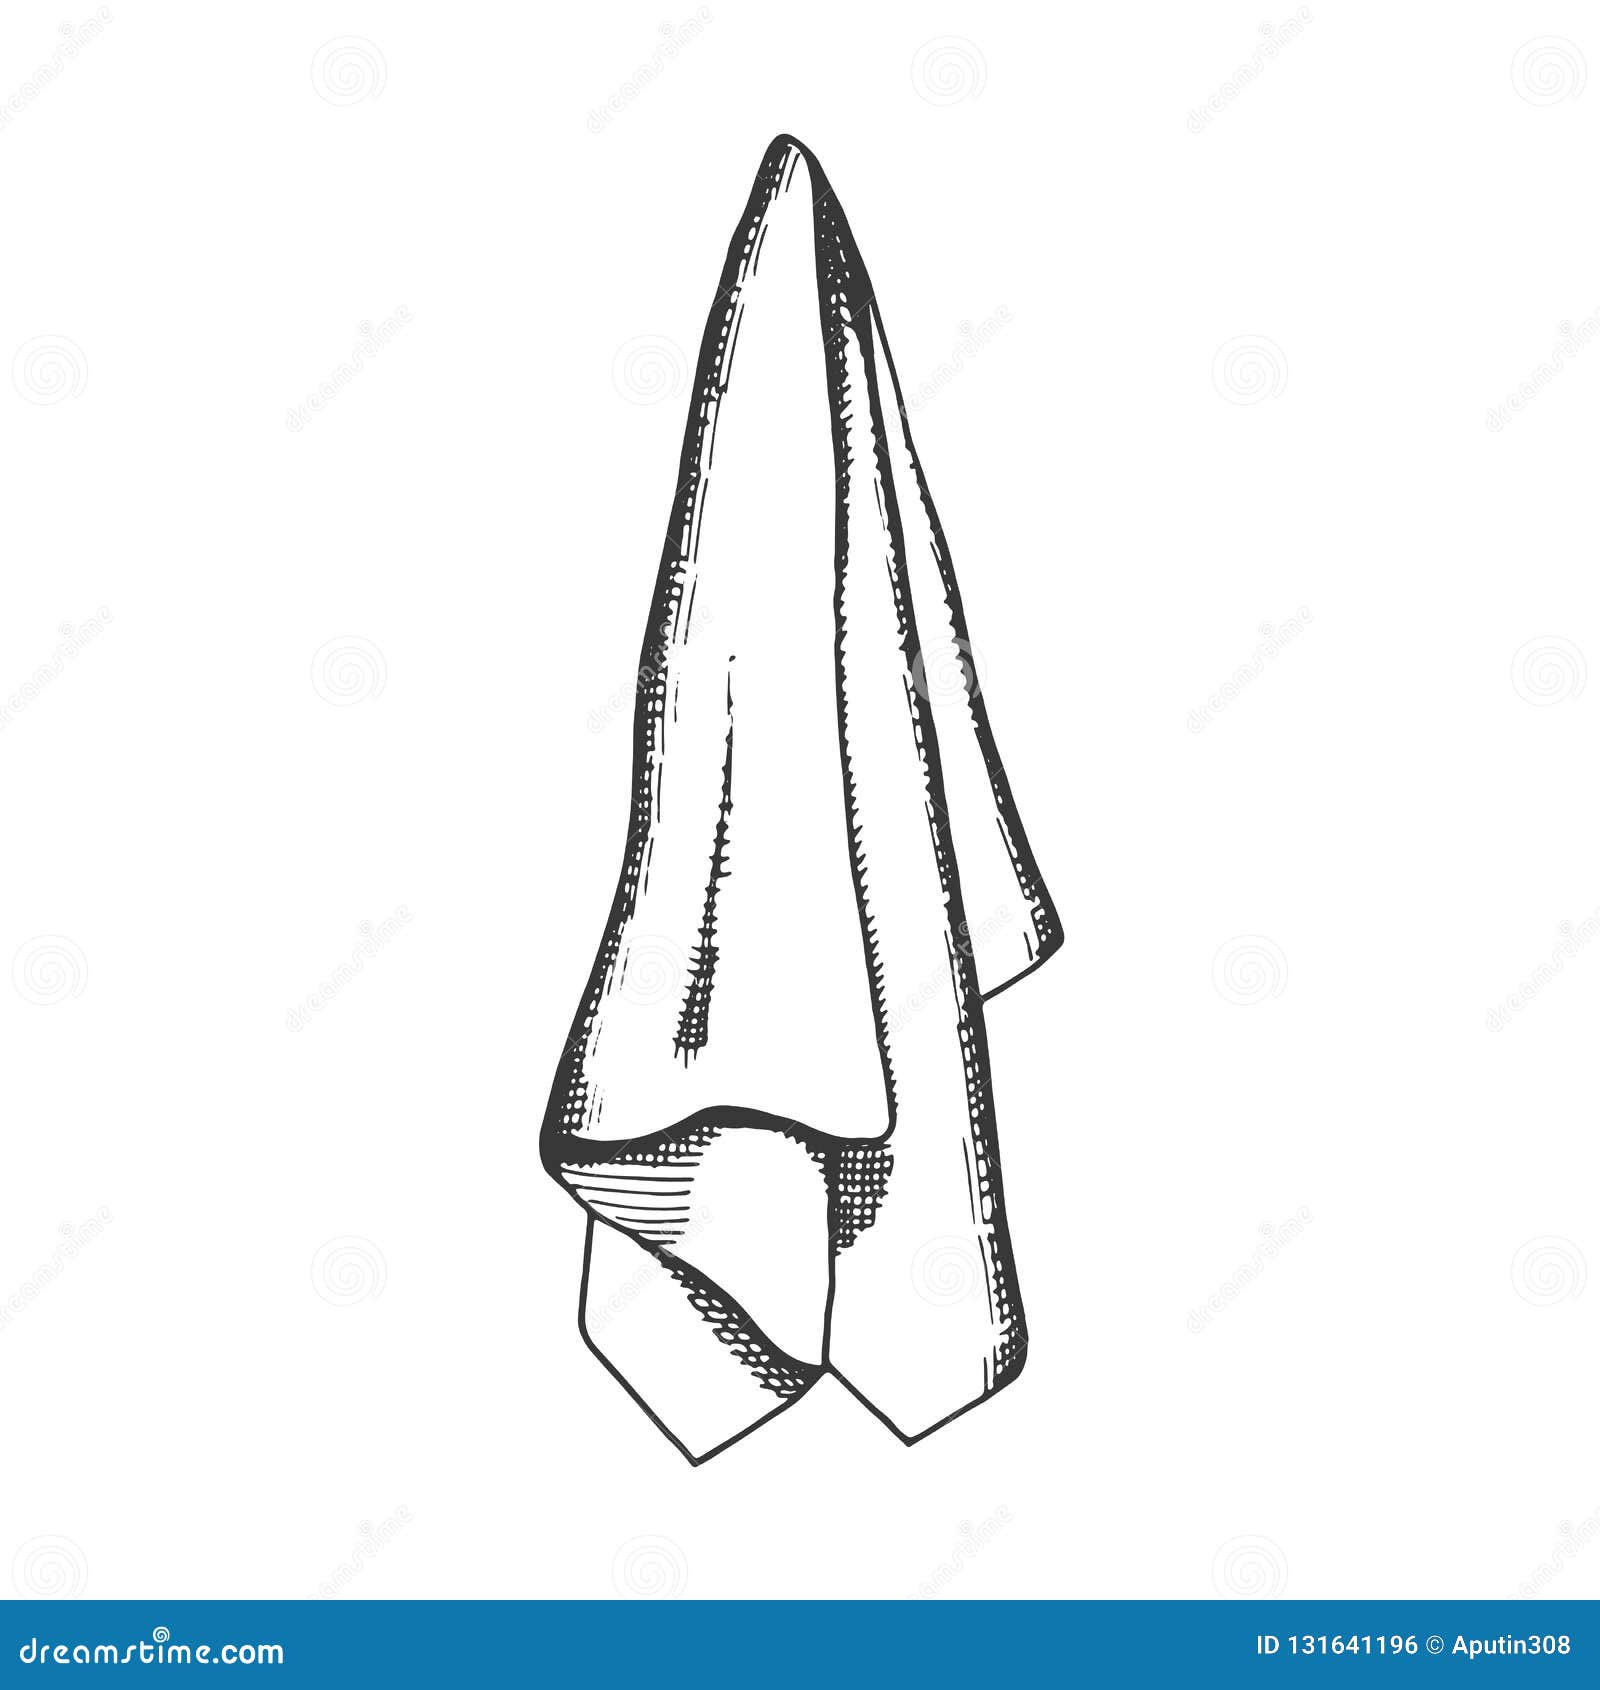 Towel Sketch Vector Images (over 2,200)